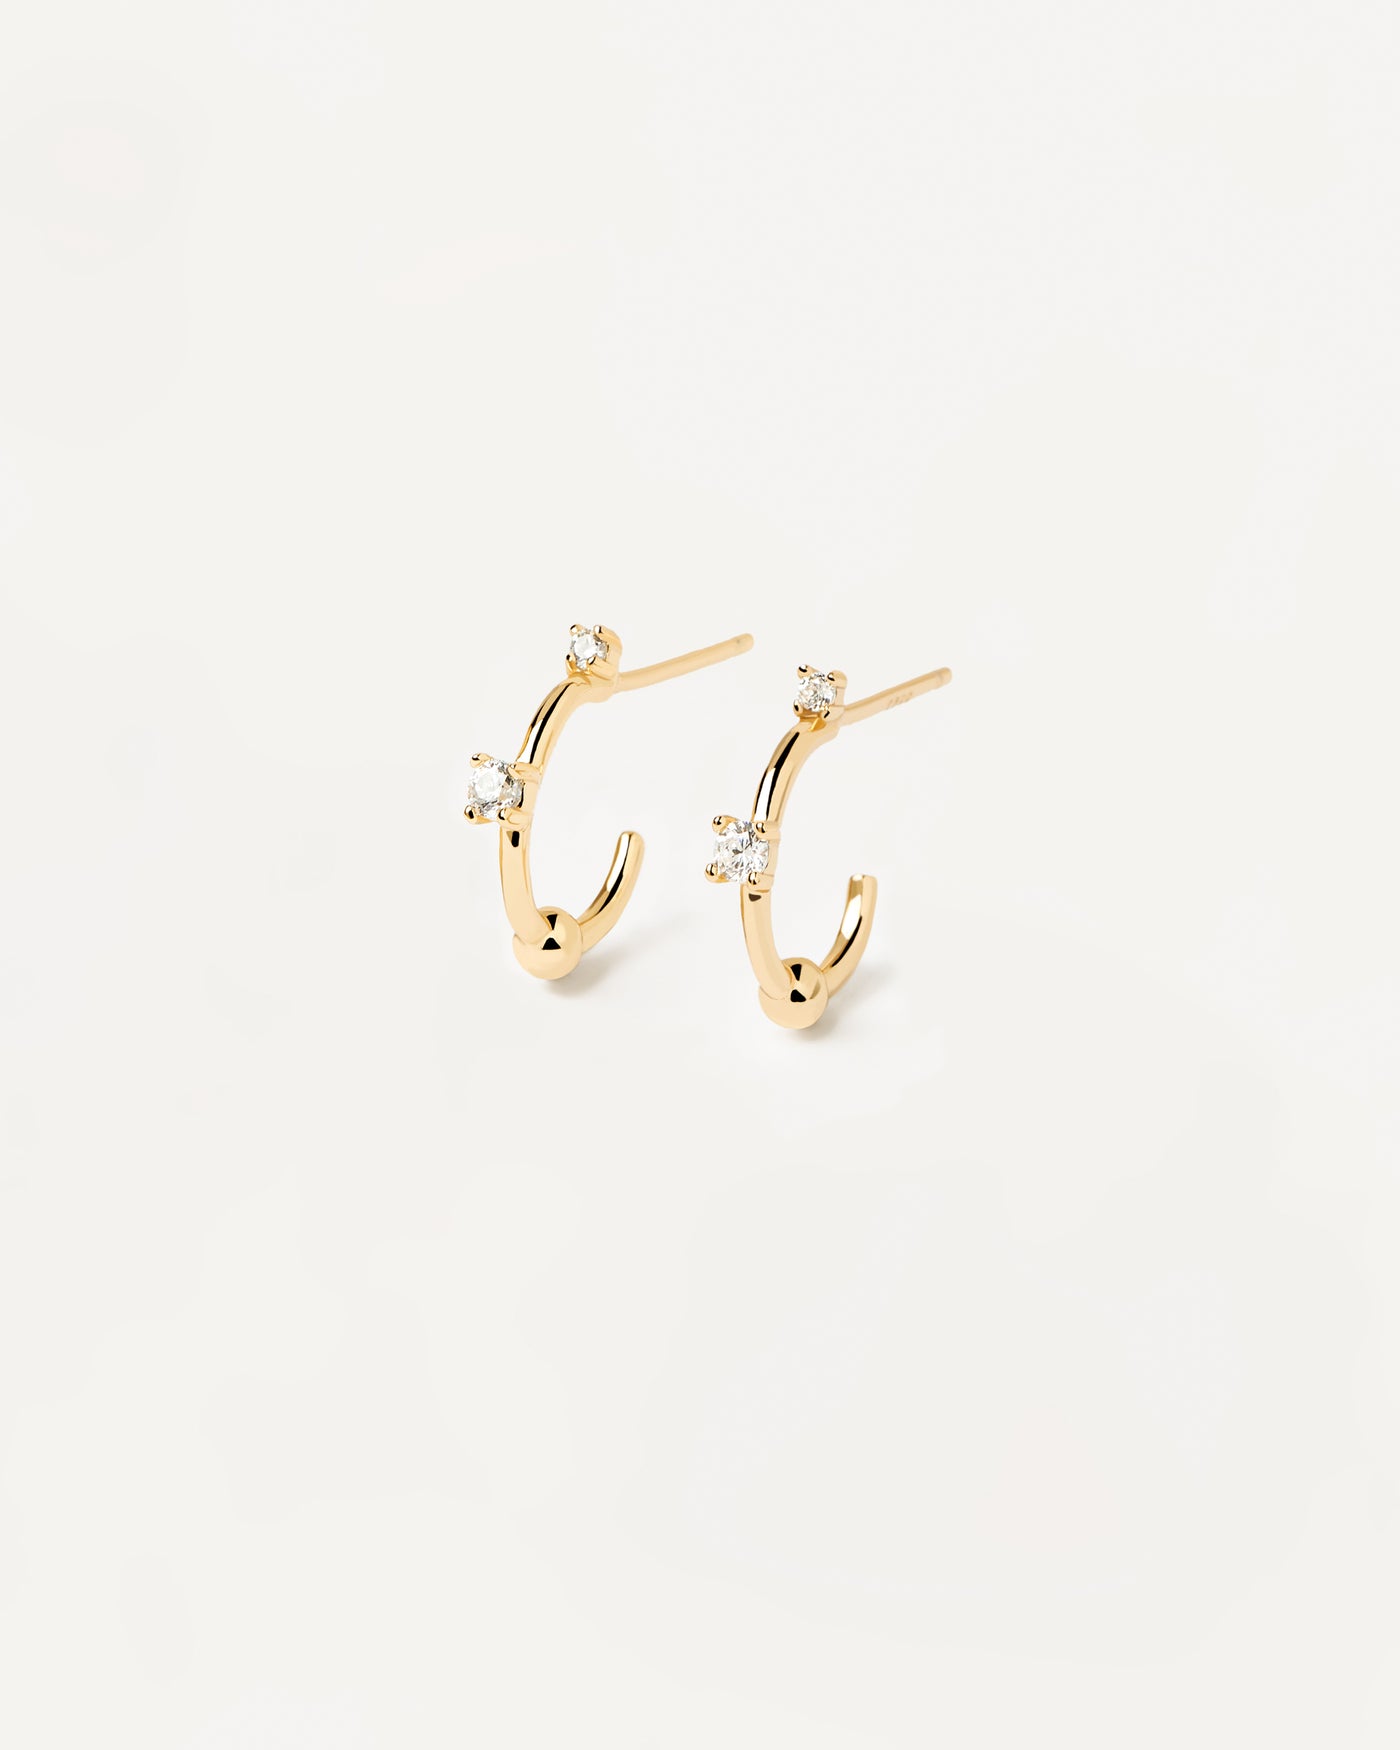 Kaya Gold Earrings - 925 sterling silver / 18K gold plating